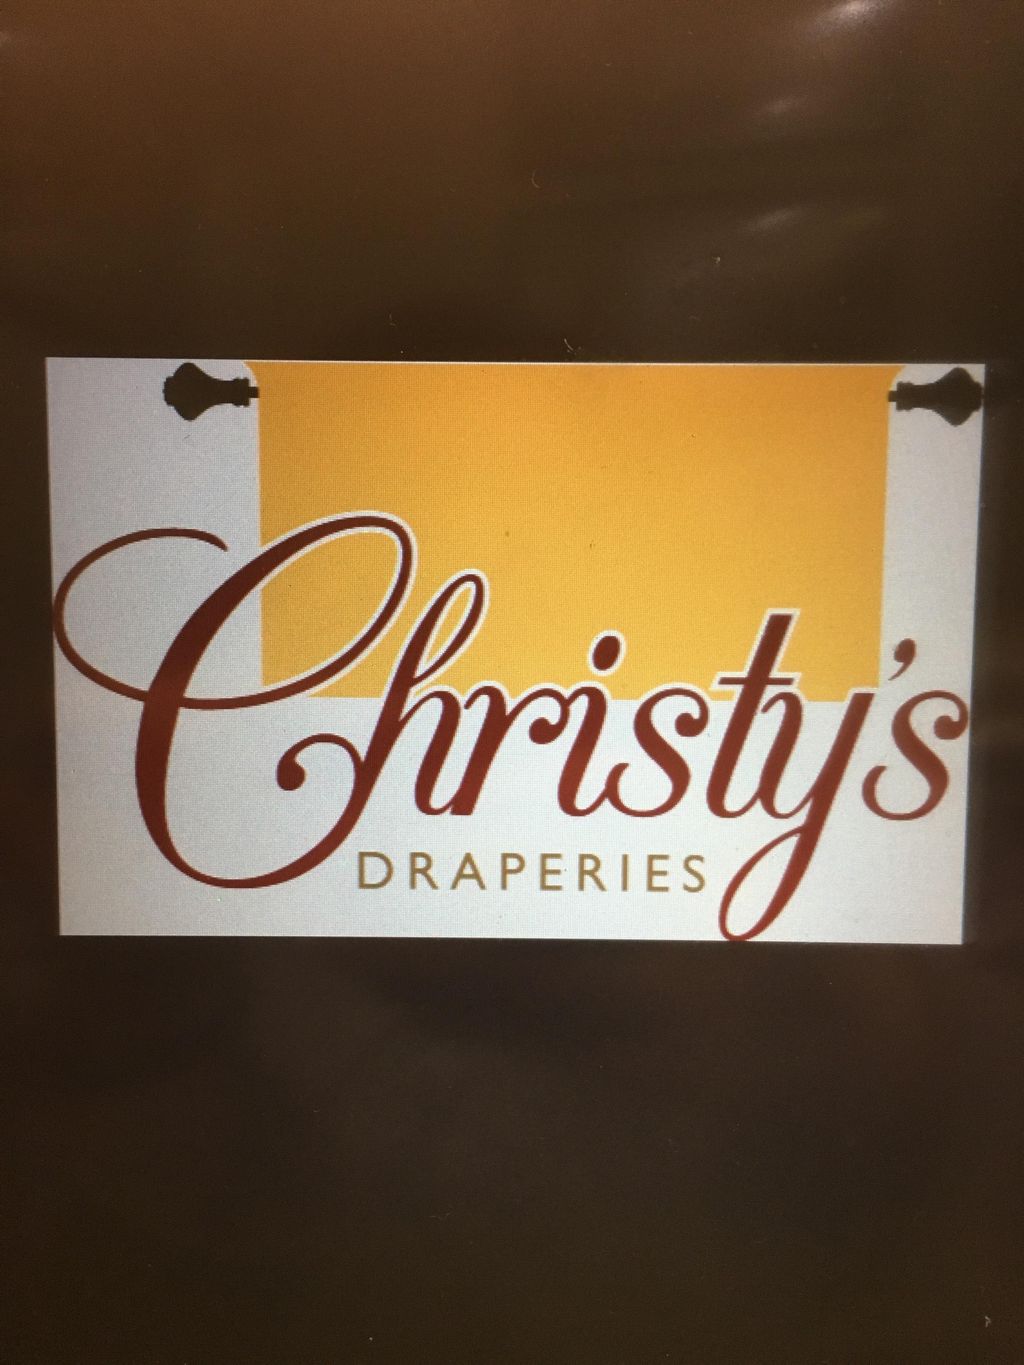 Christy's Draperies